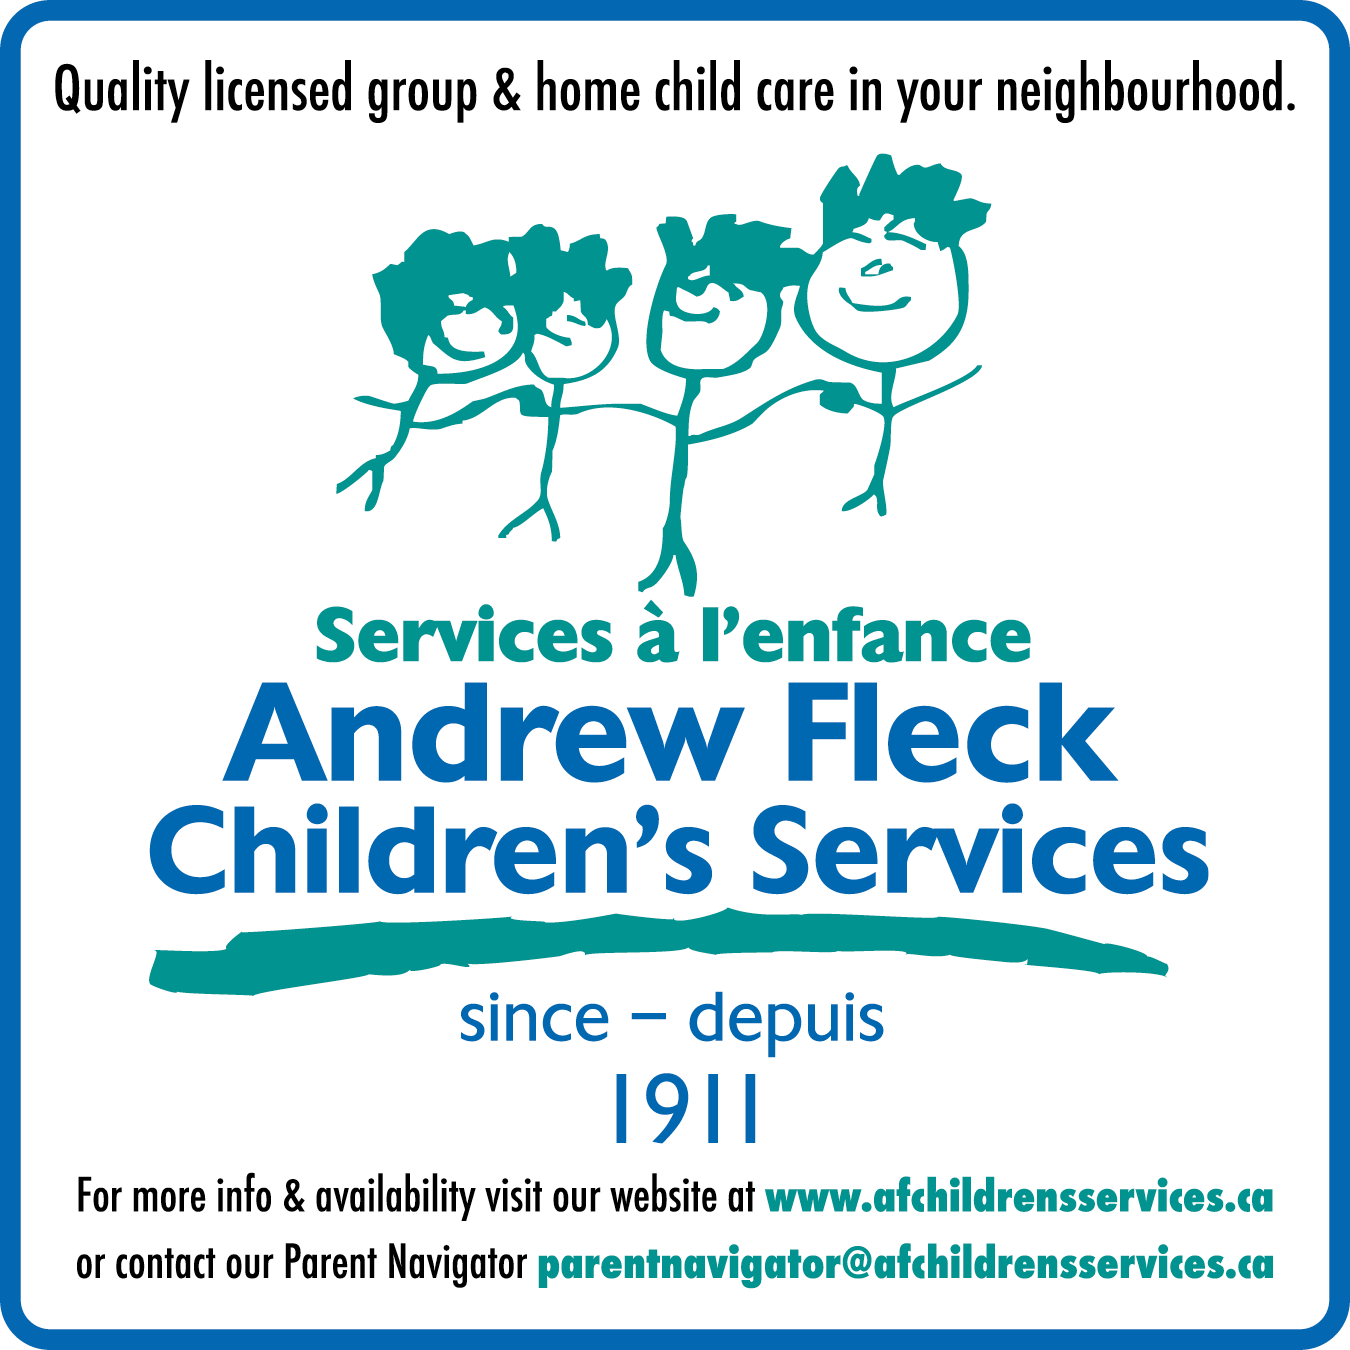 Andrew Fleck Children's Services